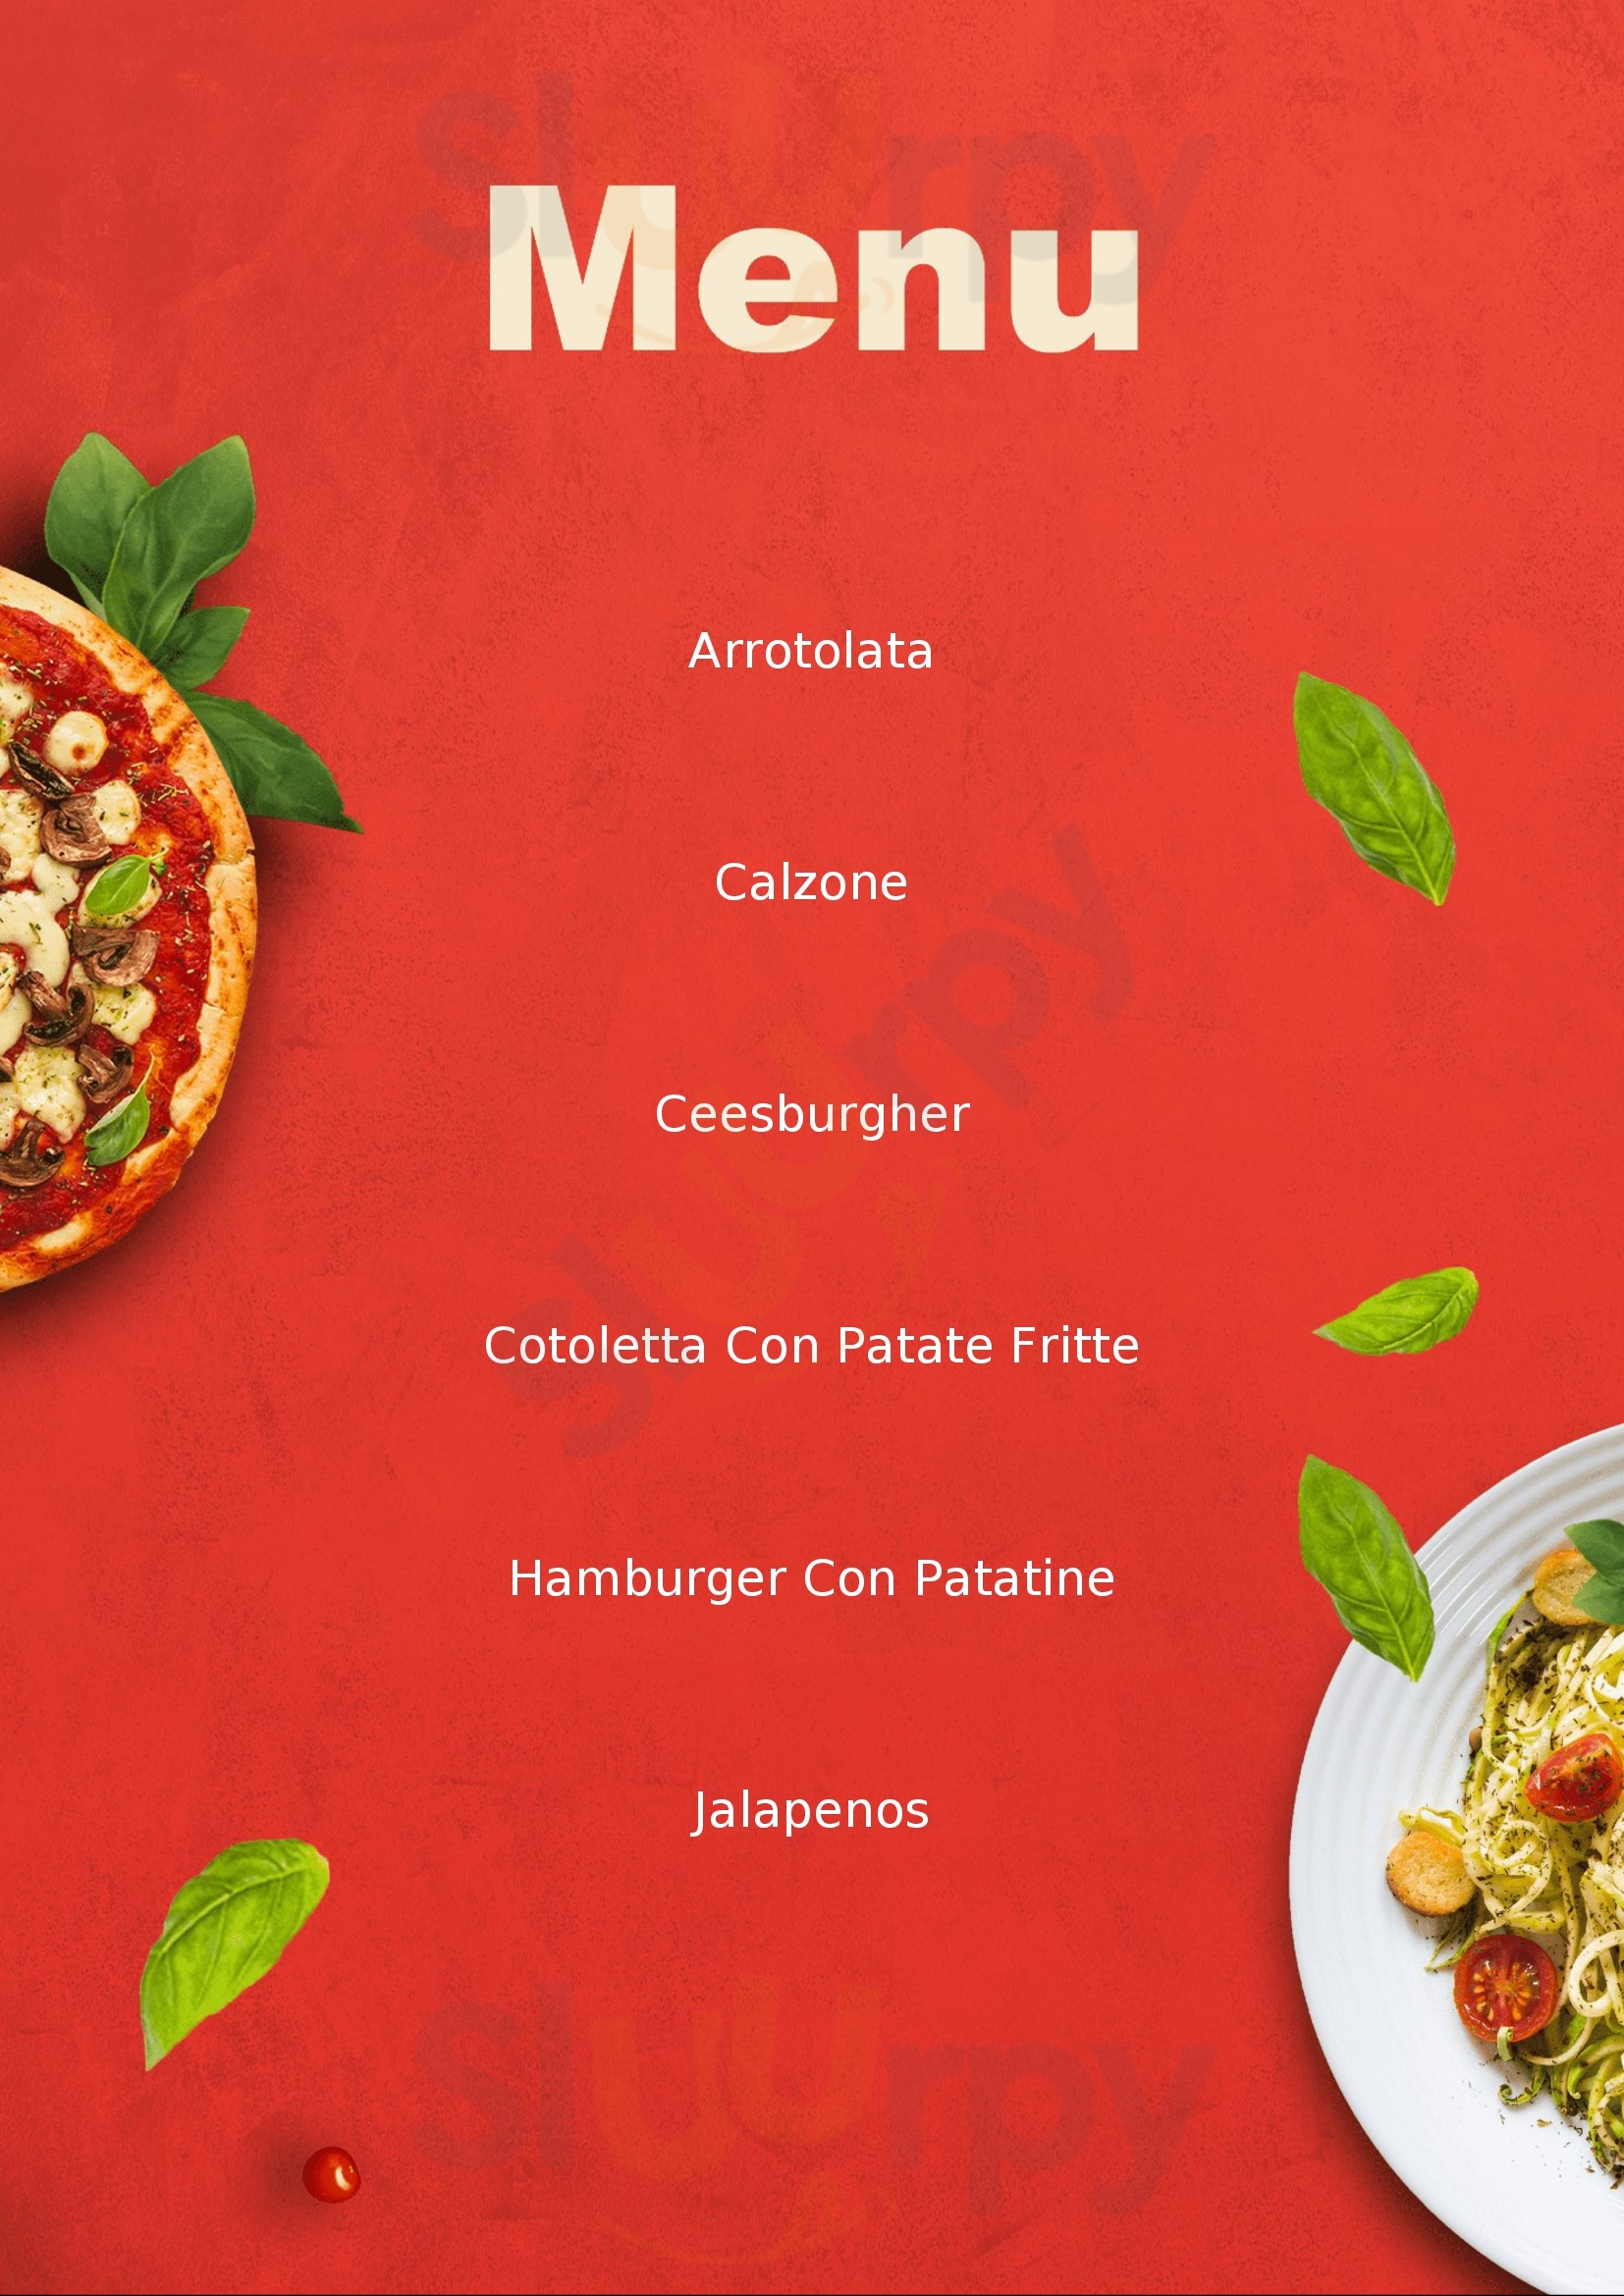 Pizzeria Verdi Spinea menù 1 pagina